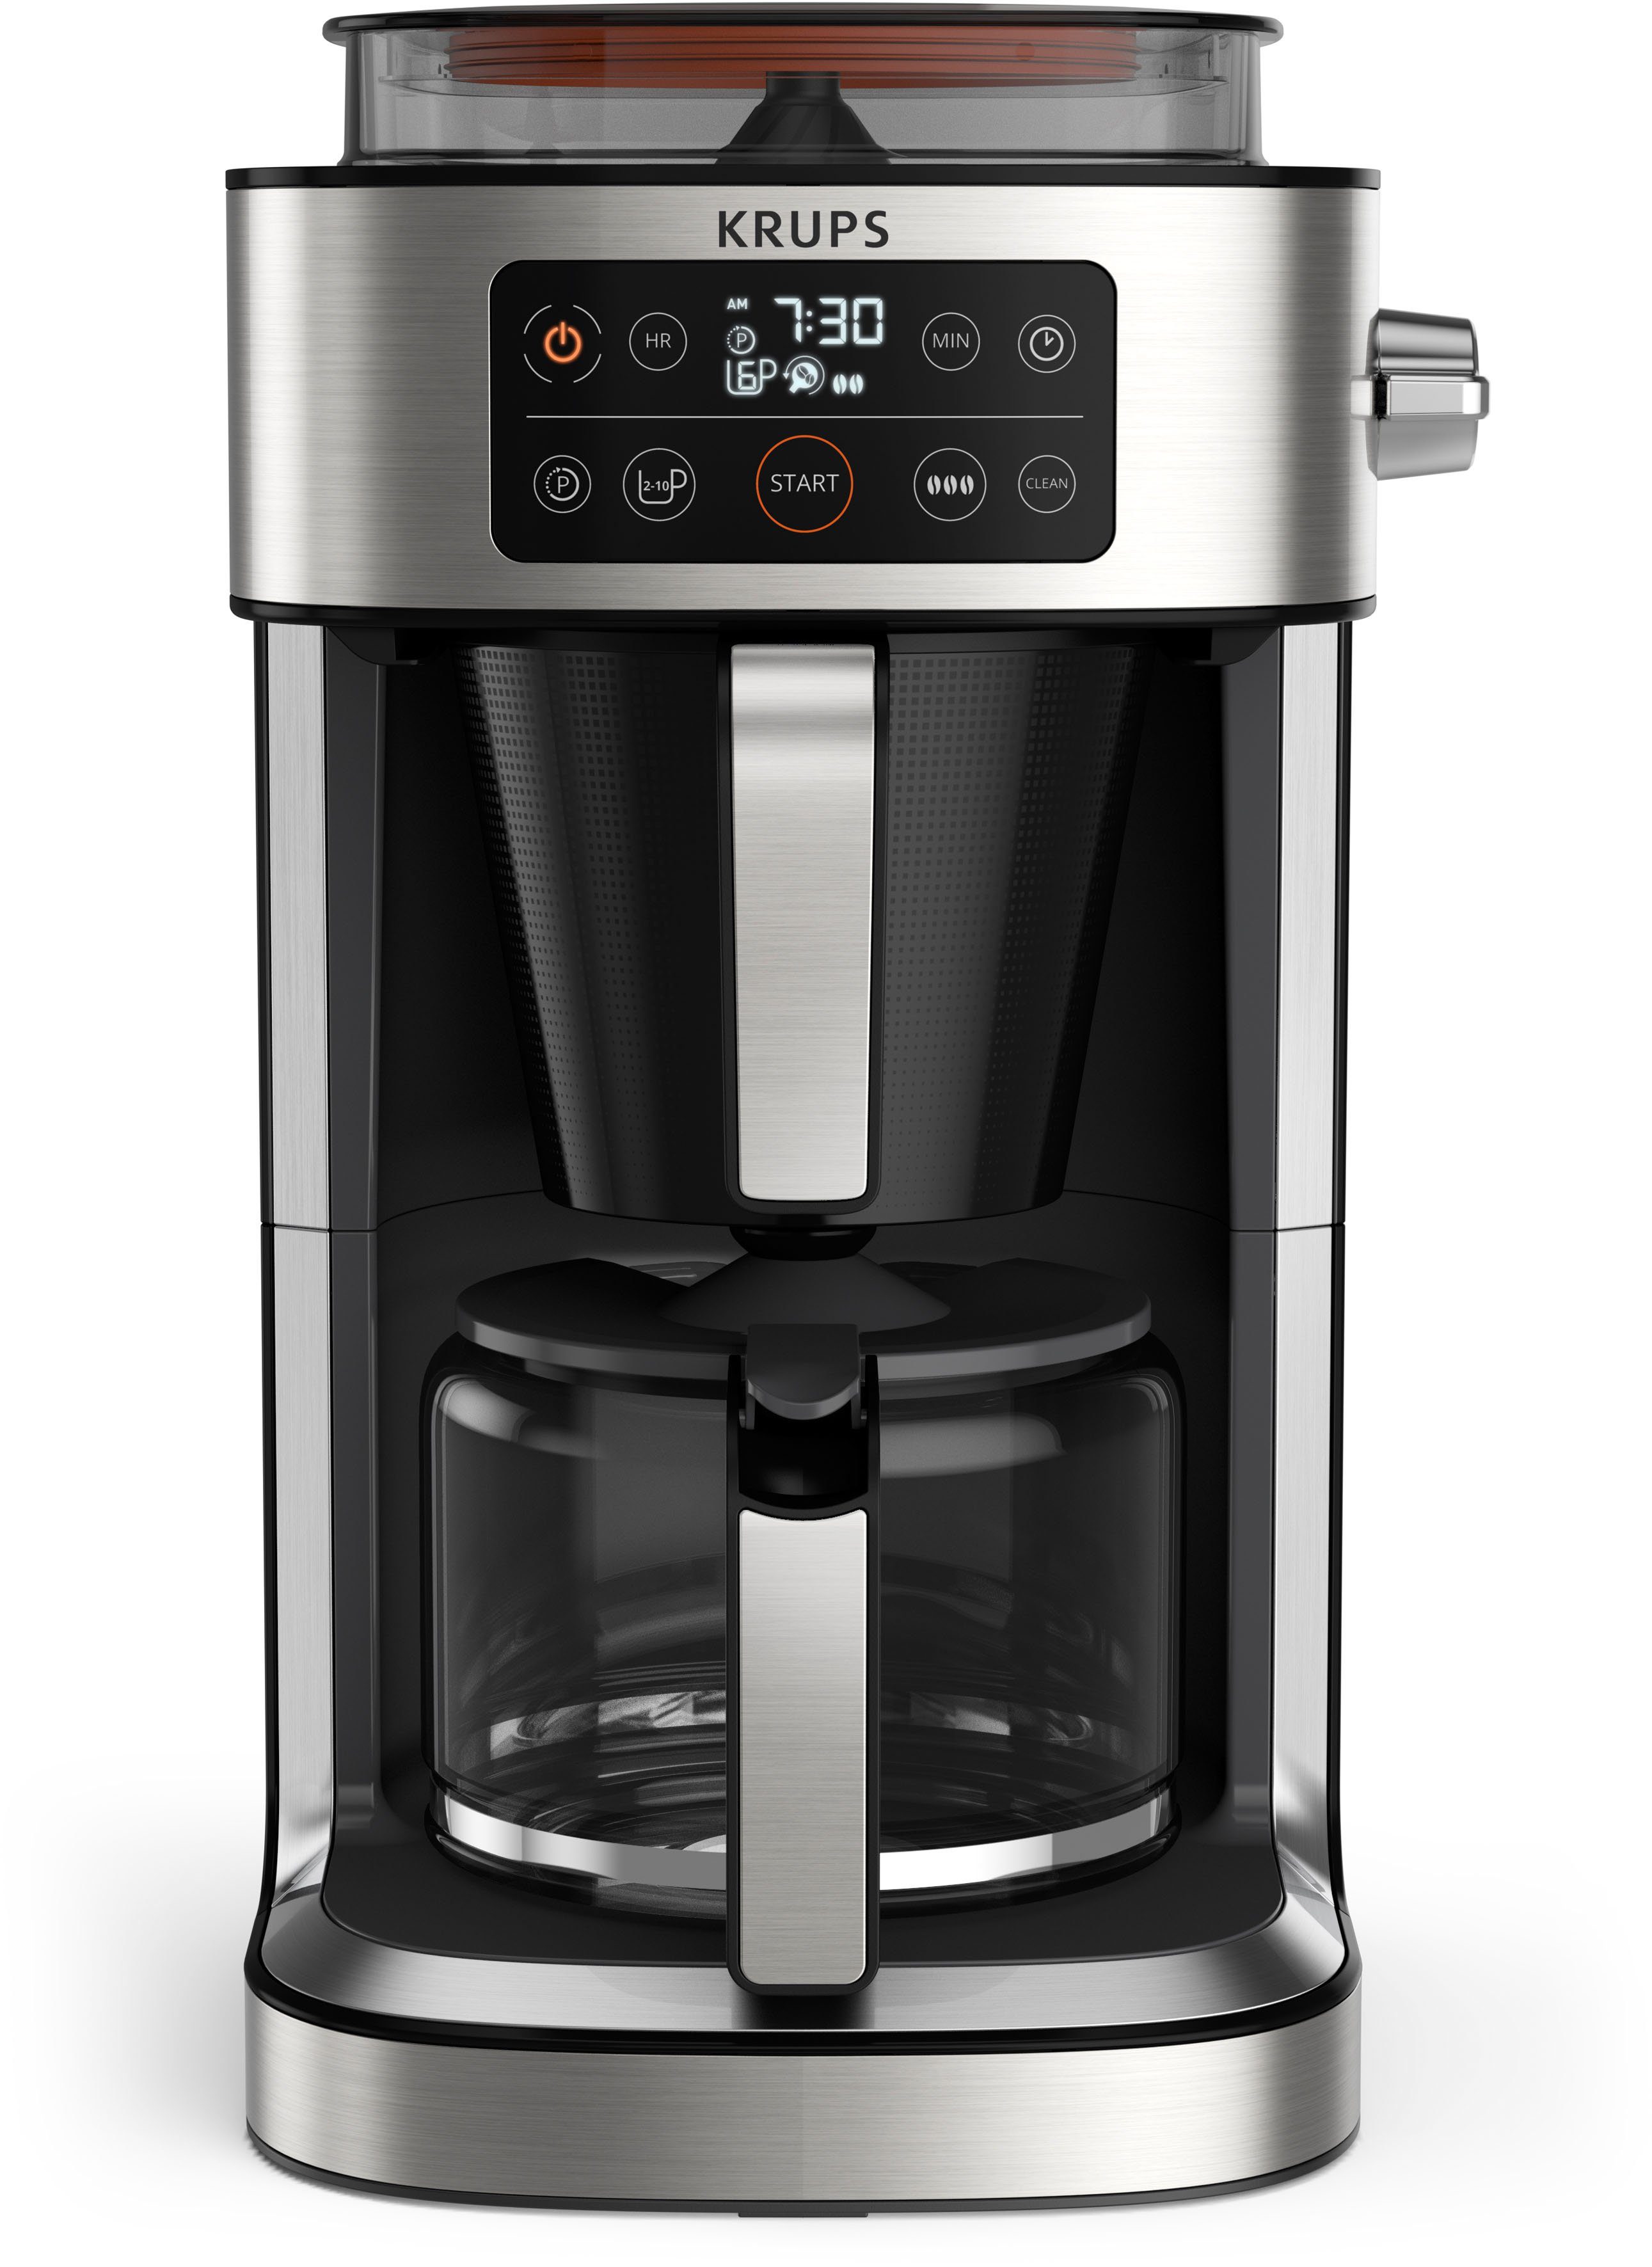 Krups Filterkaffeemaschine KM760D Aroma Partner, 1,25l Kaffeekanne, integrierte Kaffee-Vorratsbox für bis zu 400 g frischen Kaffee | Filterkaffeemaschinen